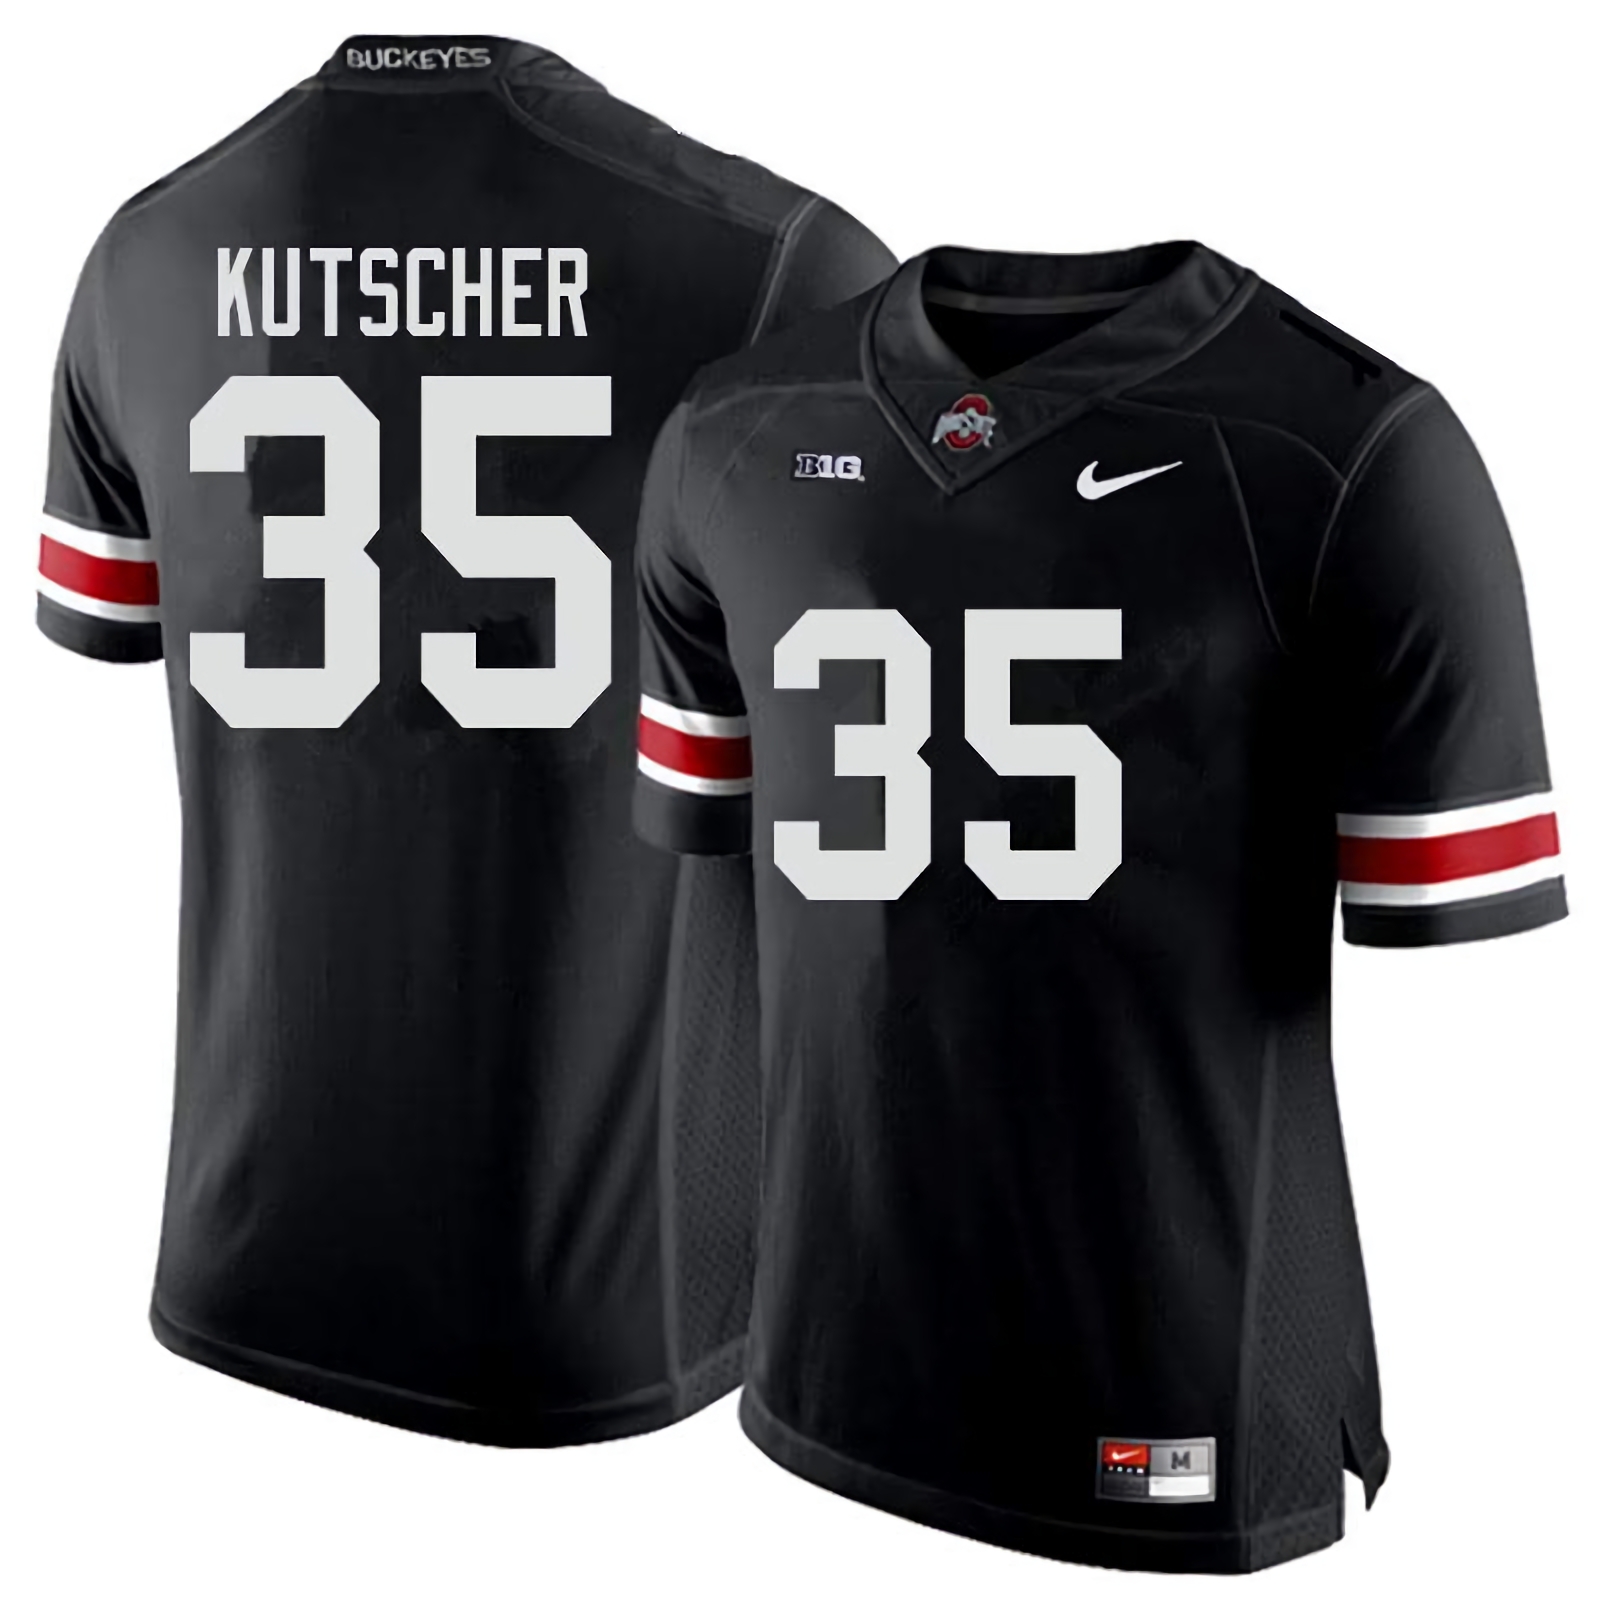 Austin Kutscher Ohio State Buckeyes Men's NCAA #35 Nike Black College Stitched Football Jersey XFM7256LO